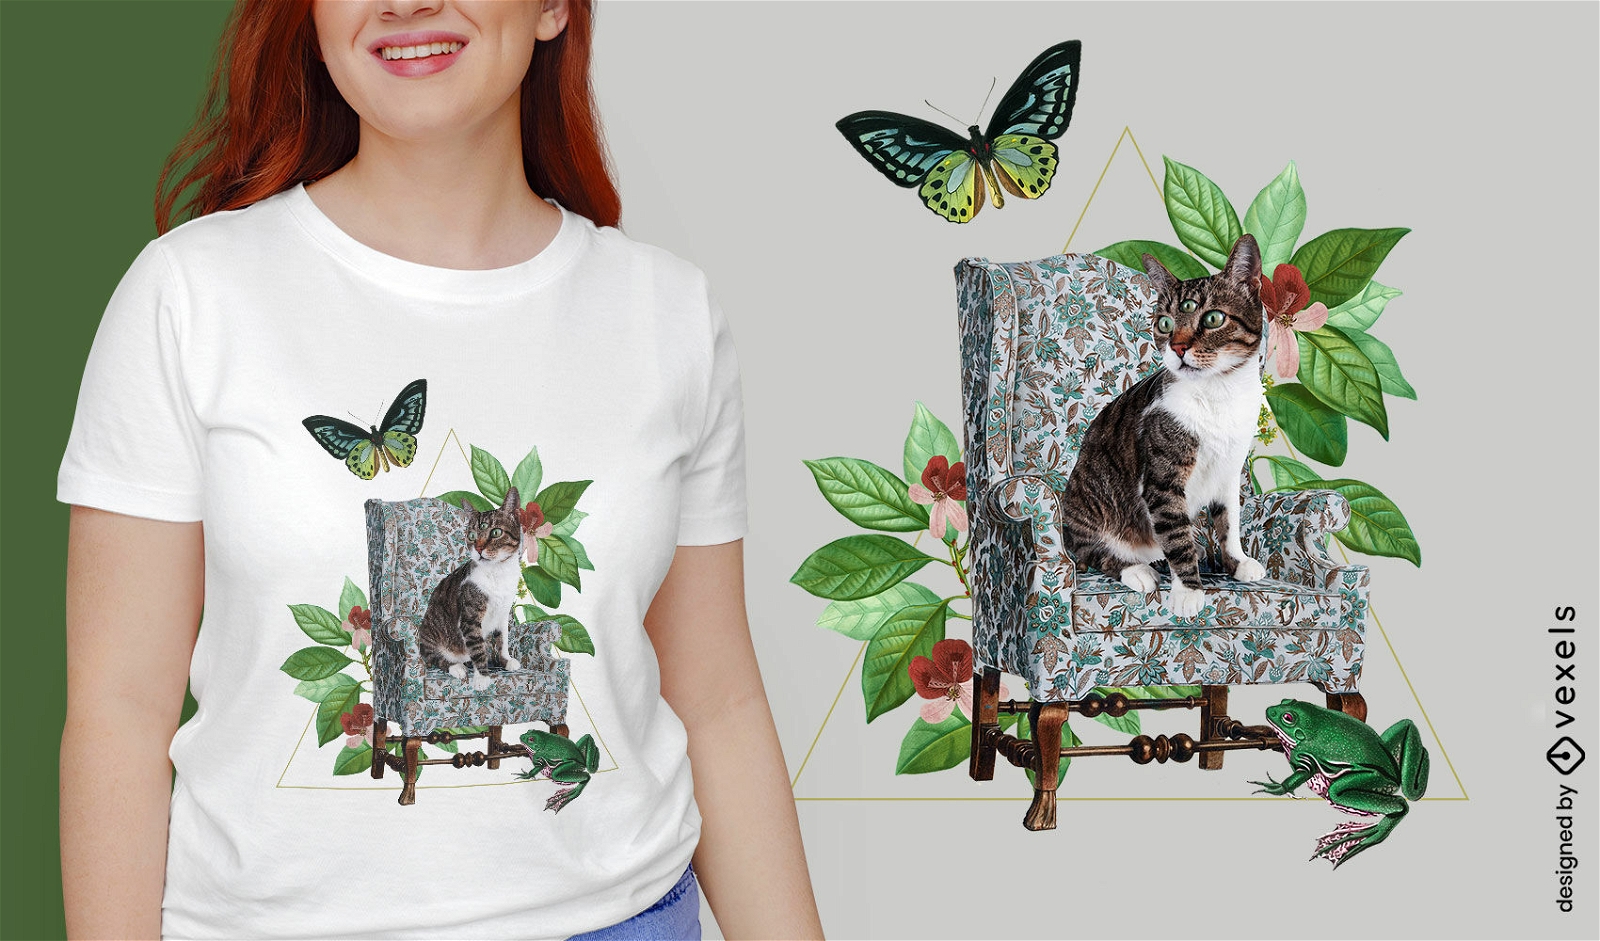 Dise?o de camiseta de naturaleza absurda de gato y plantas.